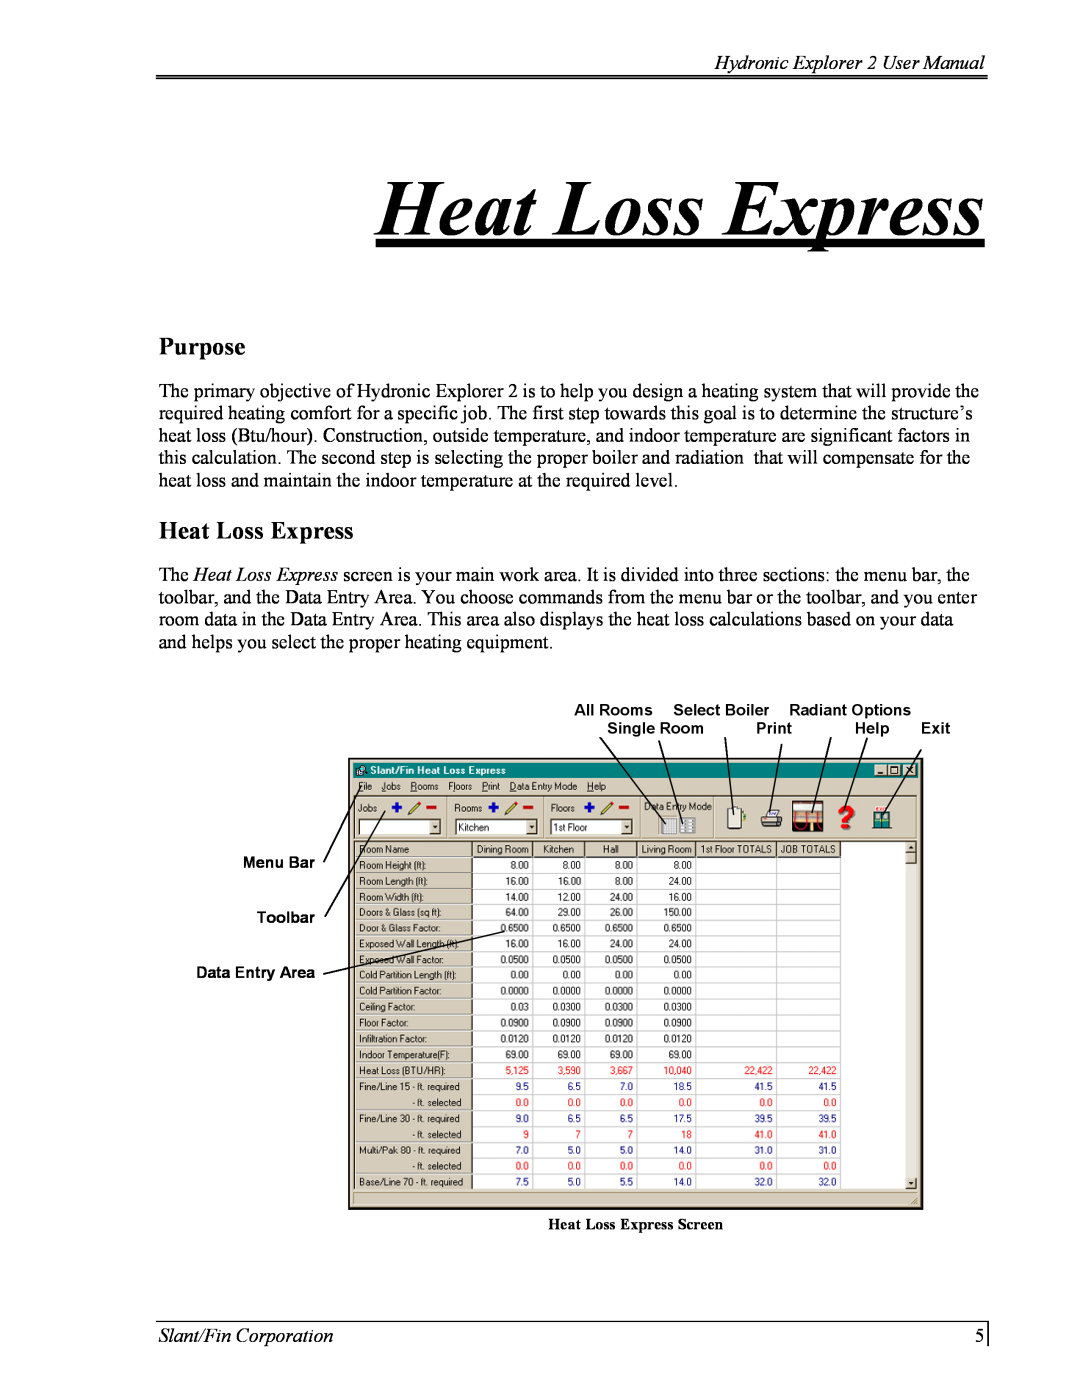 Slant/Fin Hydronic Explorer 2 user manual Heat Loss Express, Purpose, Slant/Fin Corporation 